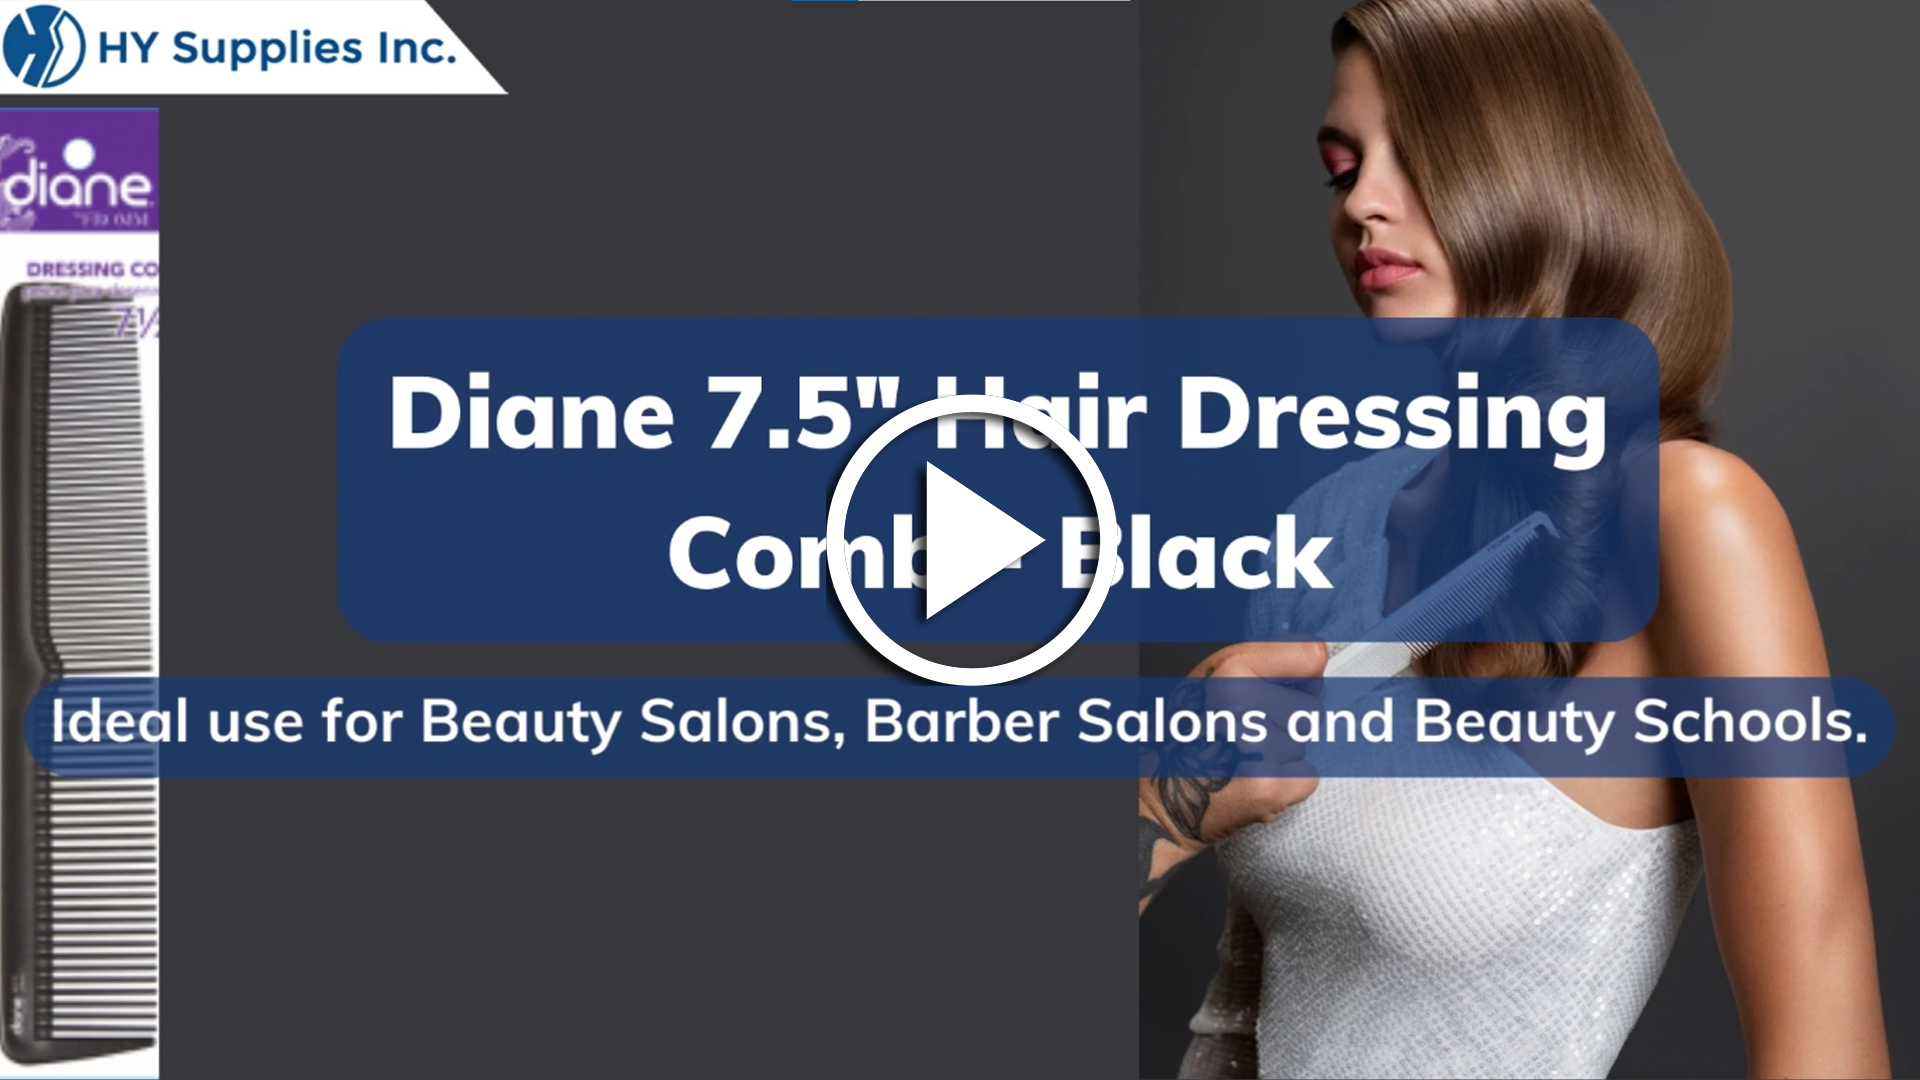 Diane 7.5" Hair Dressing Comb - Black